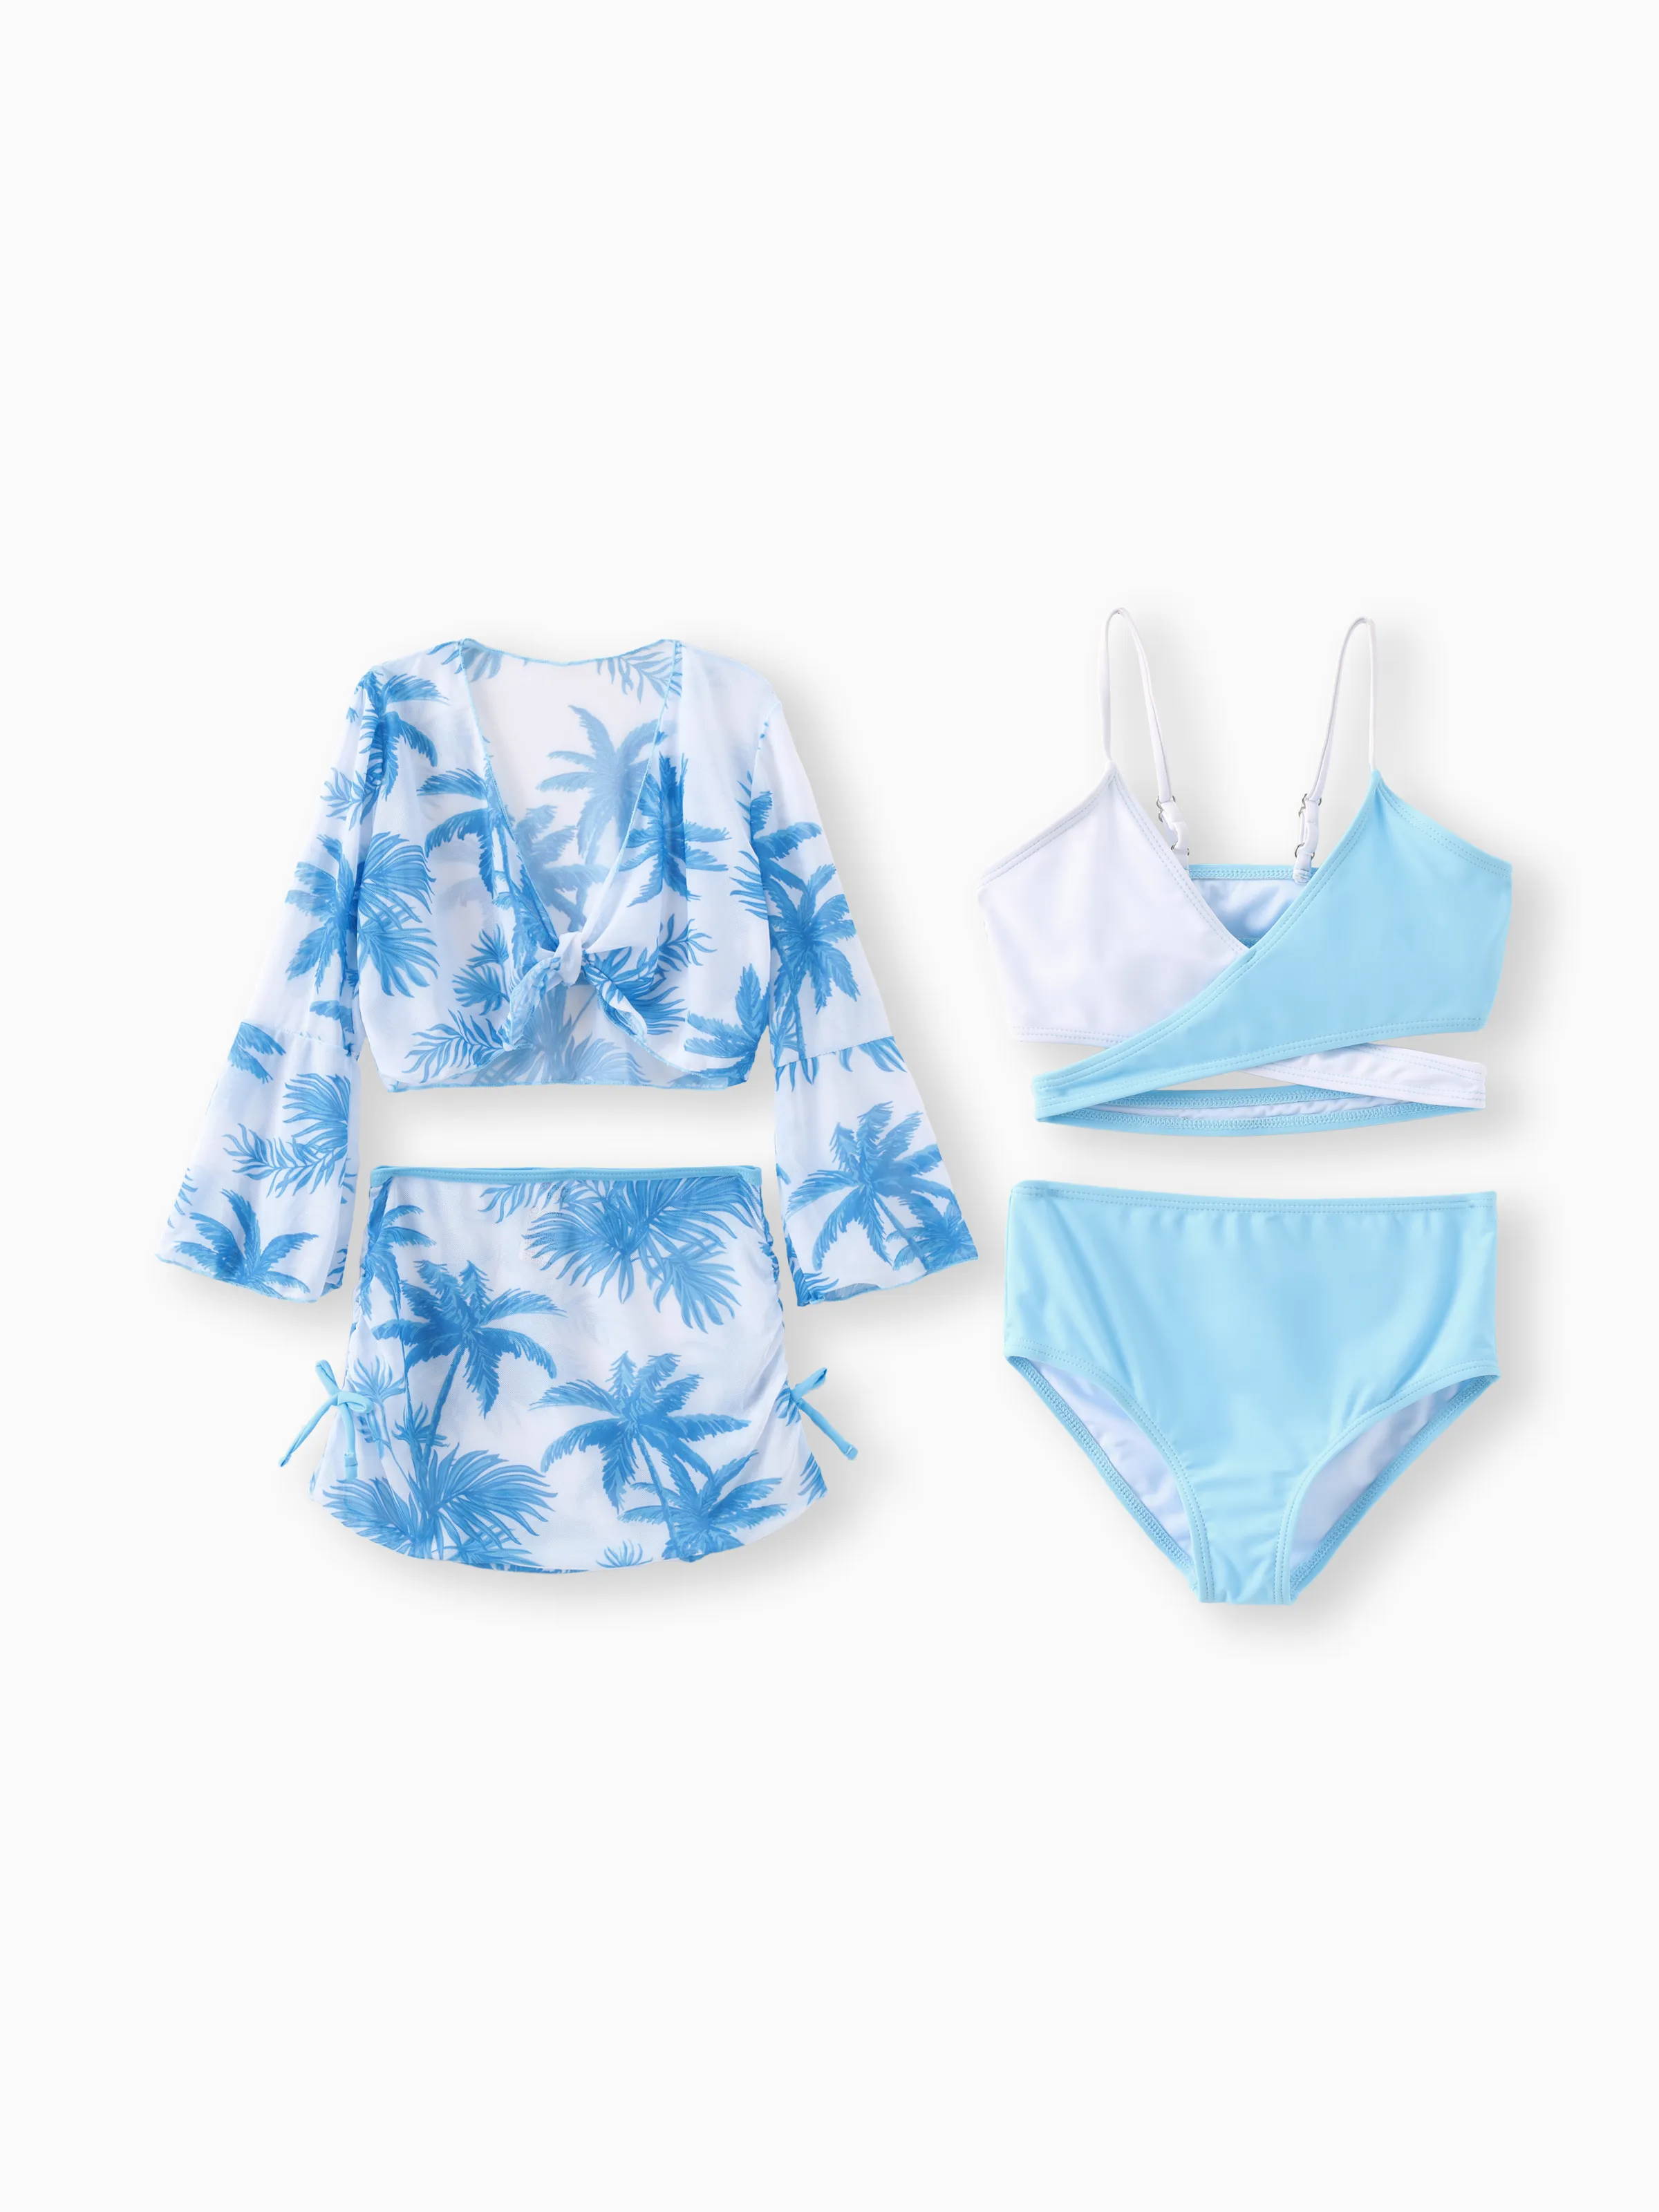 

Bohemia Hanging Strap Girl's Swimsuit Set, 4pcs, Tropical Plants & Flowers Pattern